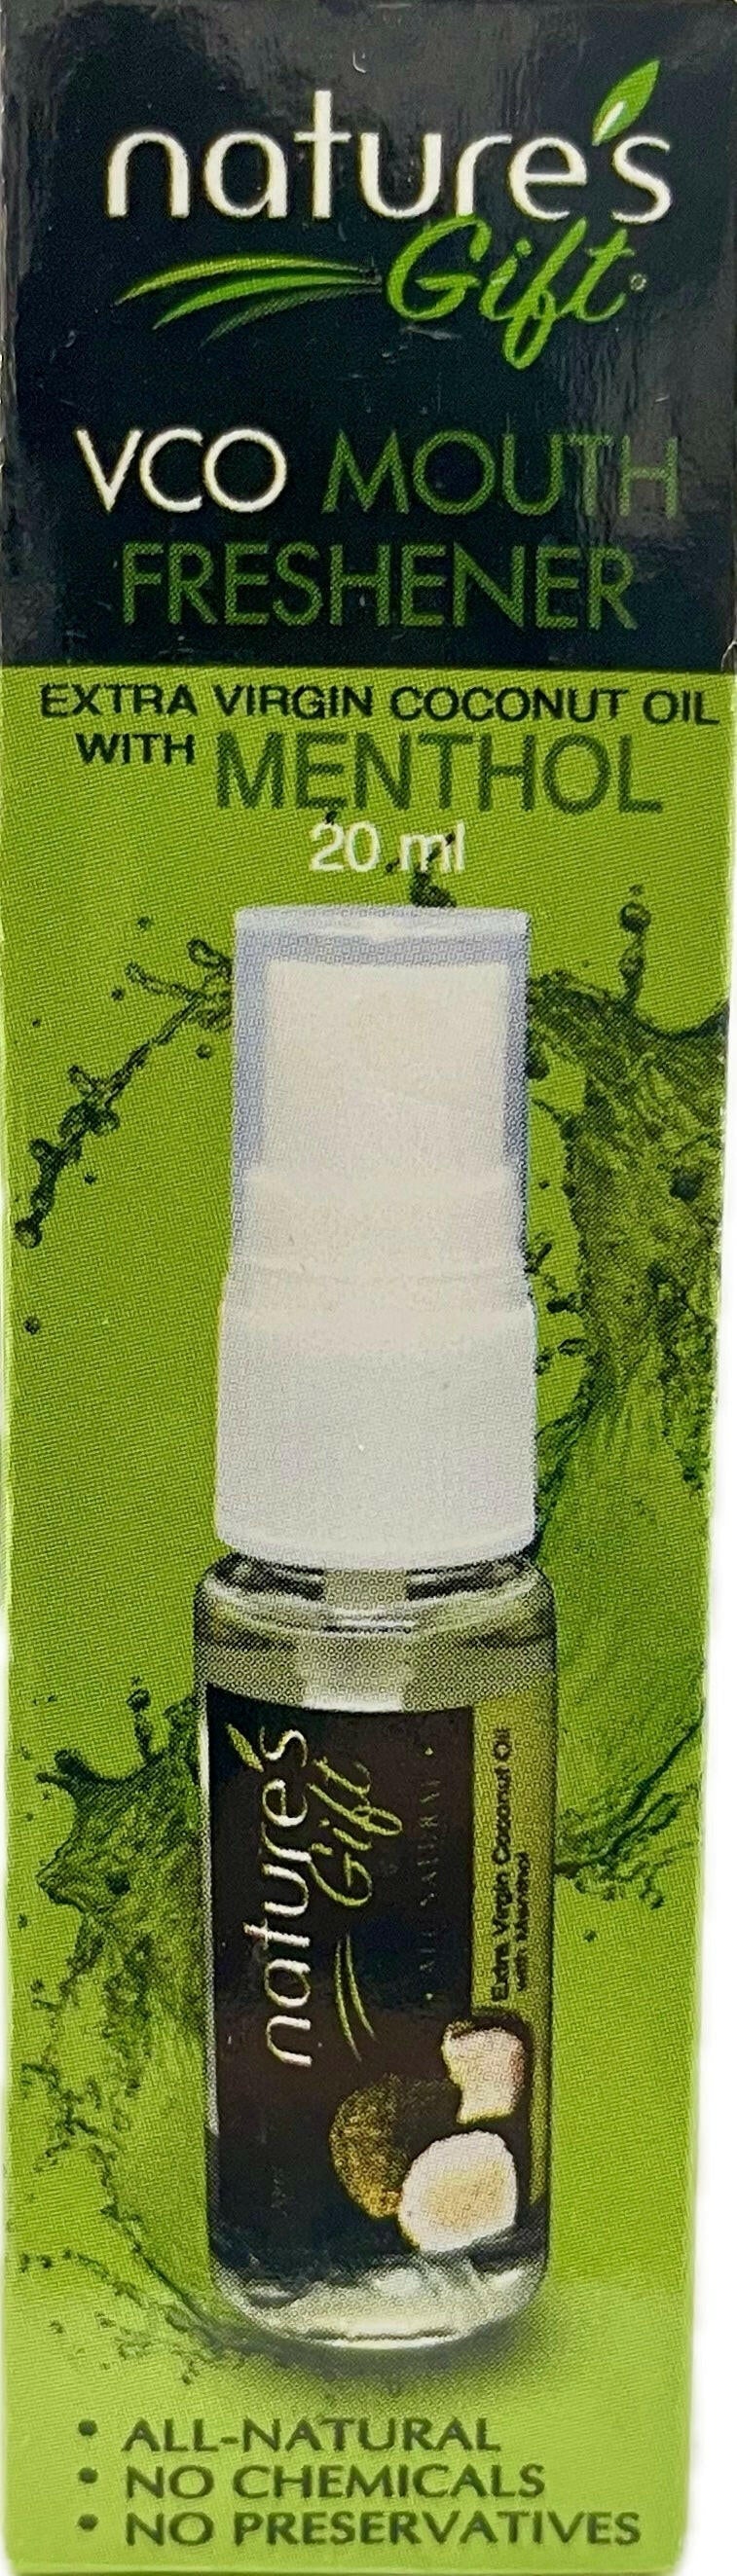 Nature's Gift VCO Mouth Freshener Spray (20mL)